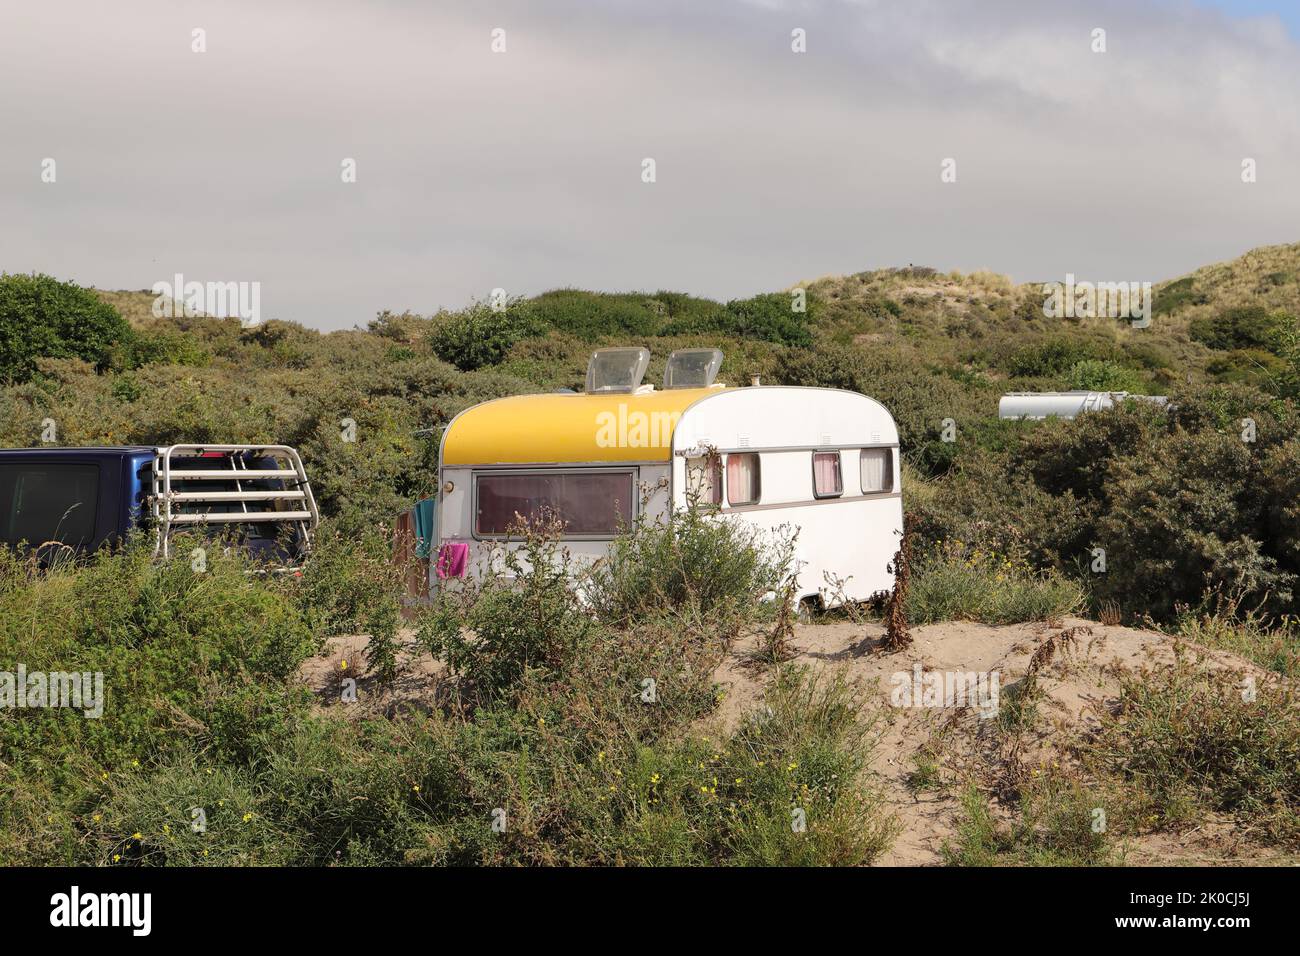 An old large caravan at a campsite Stock Photo